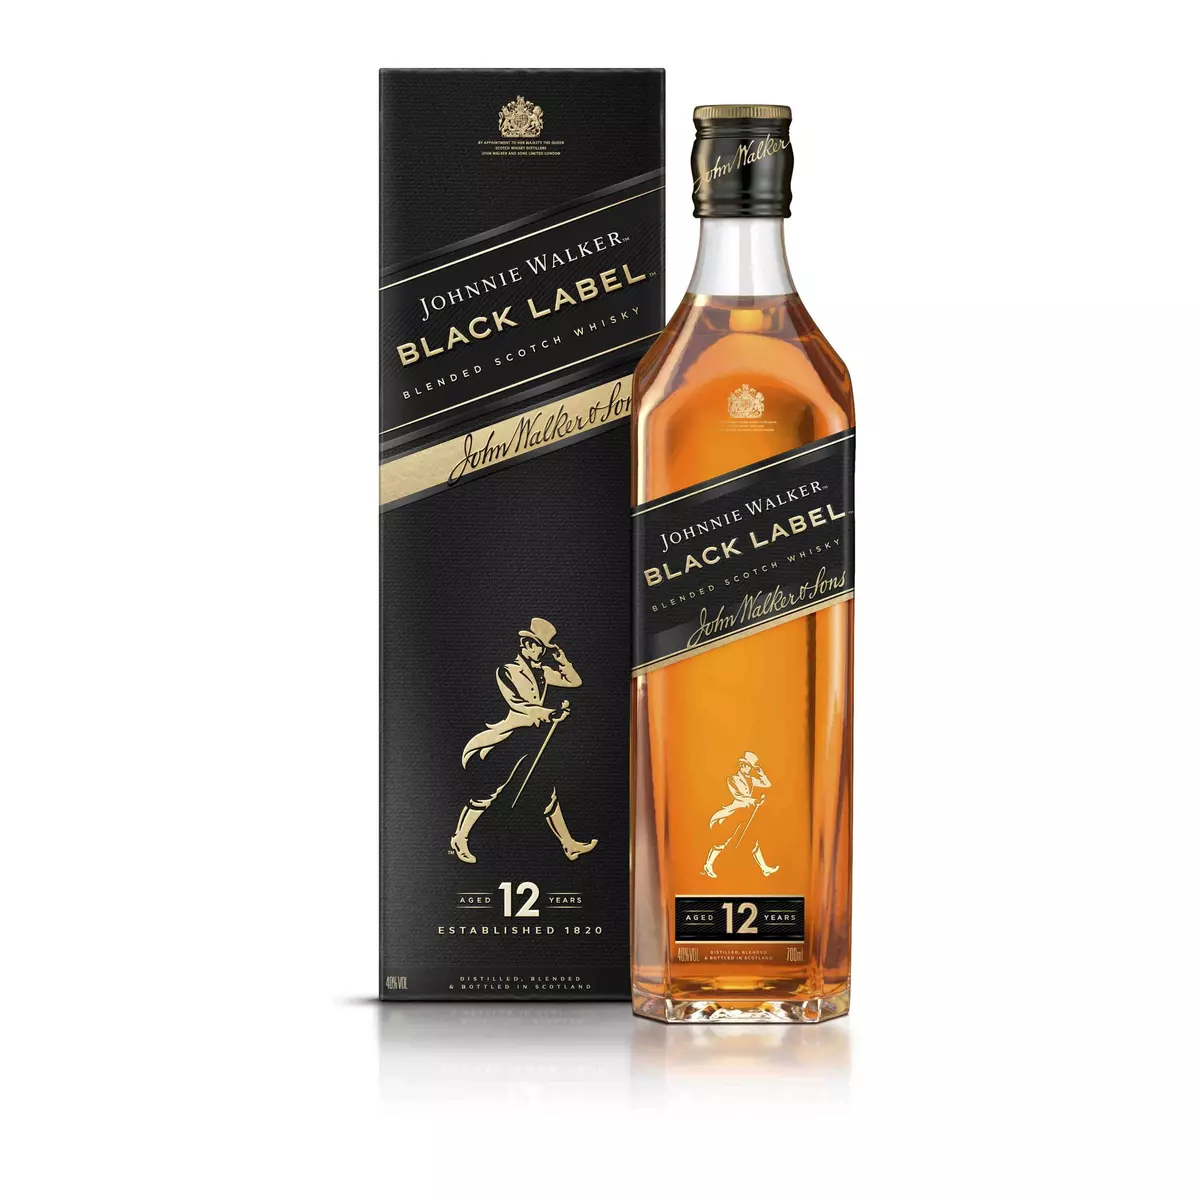 JOHNNIE WALKER Scotch whisky écossais blended malt Black Label 40% 70cl